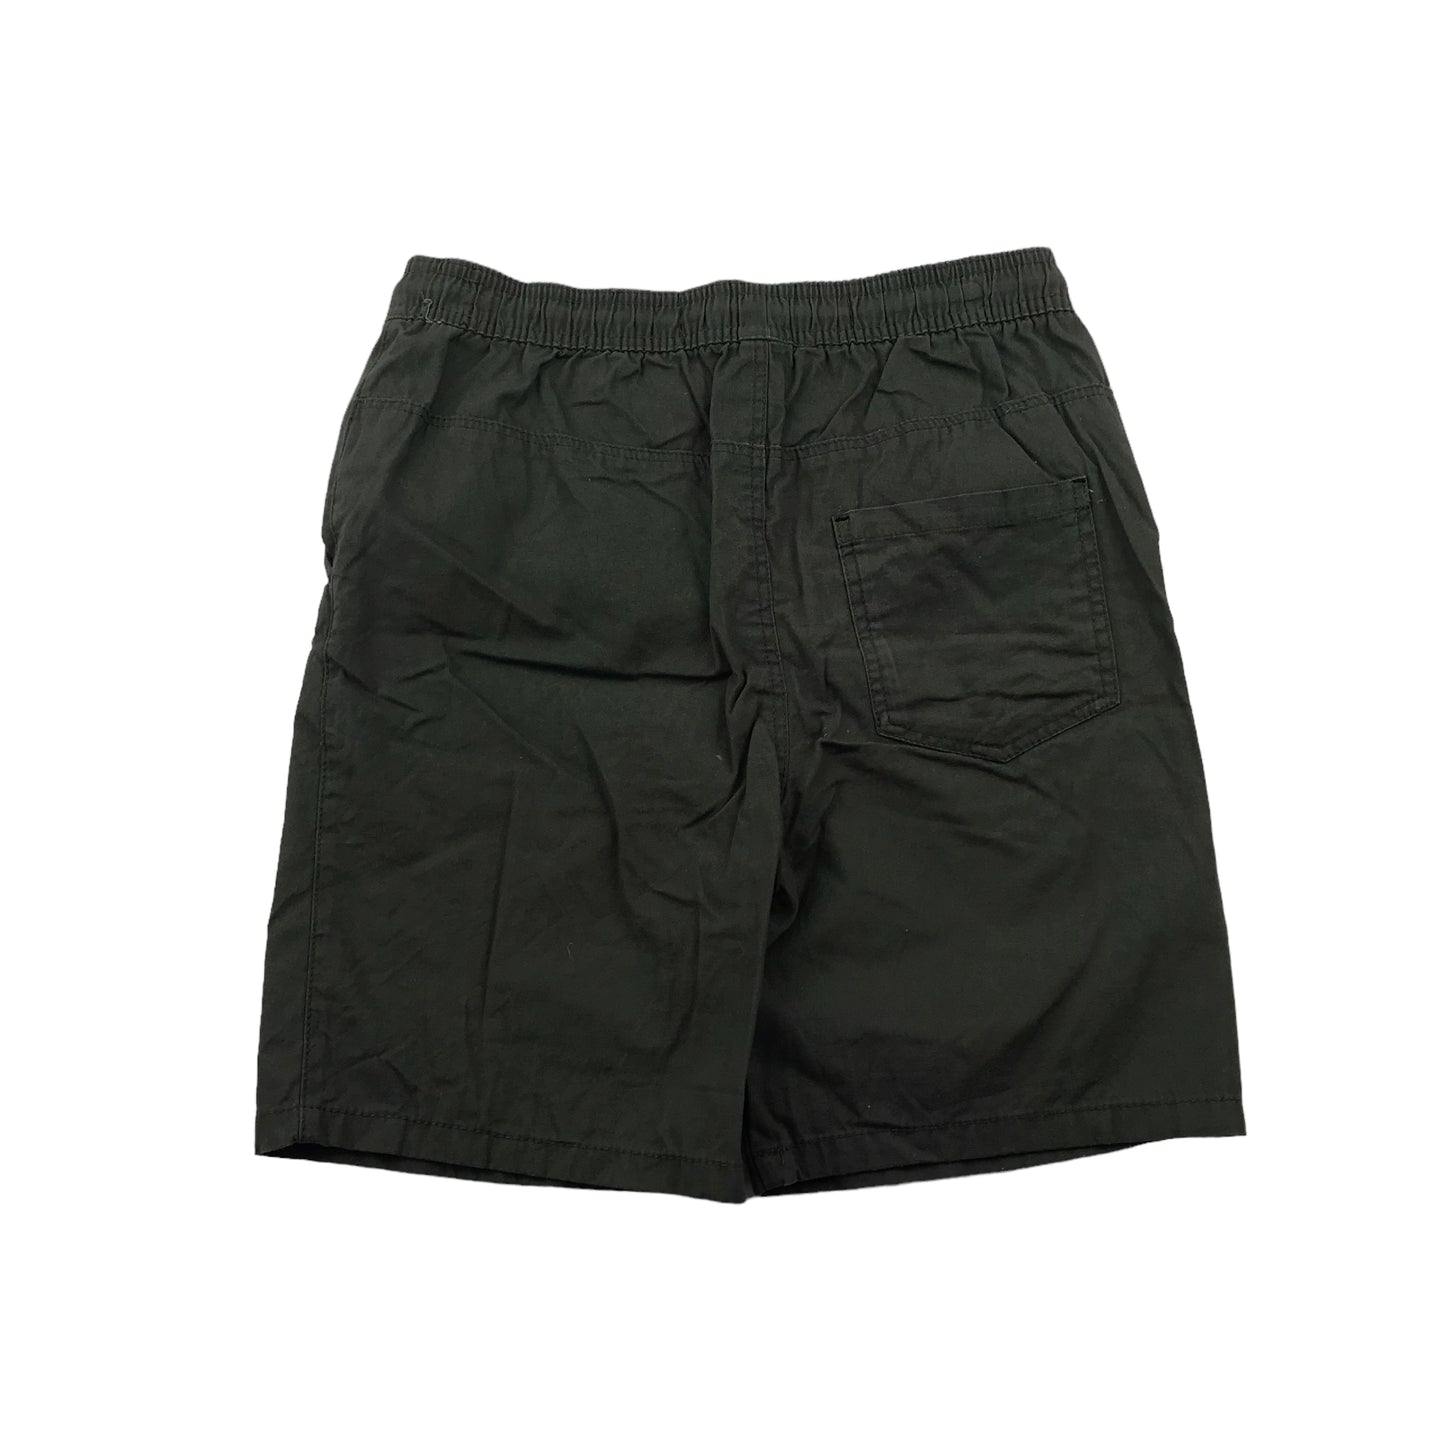 Primark Khaki Green Pull On Shorts Age 10